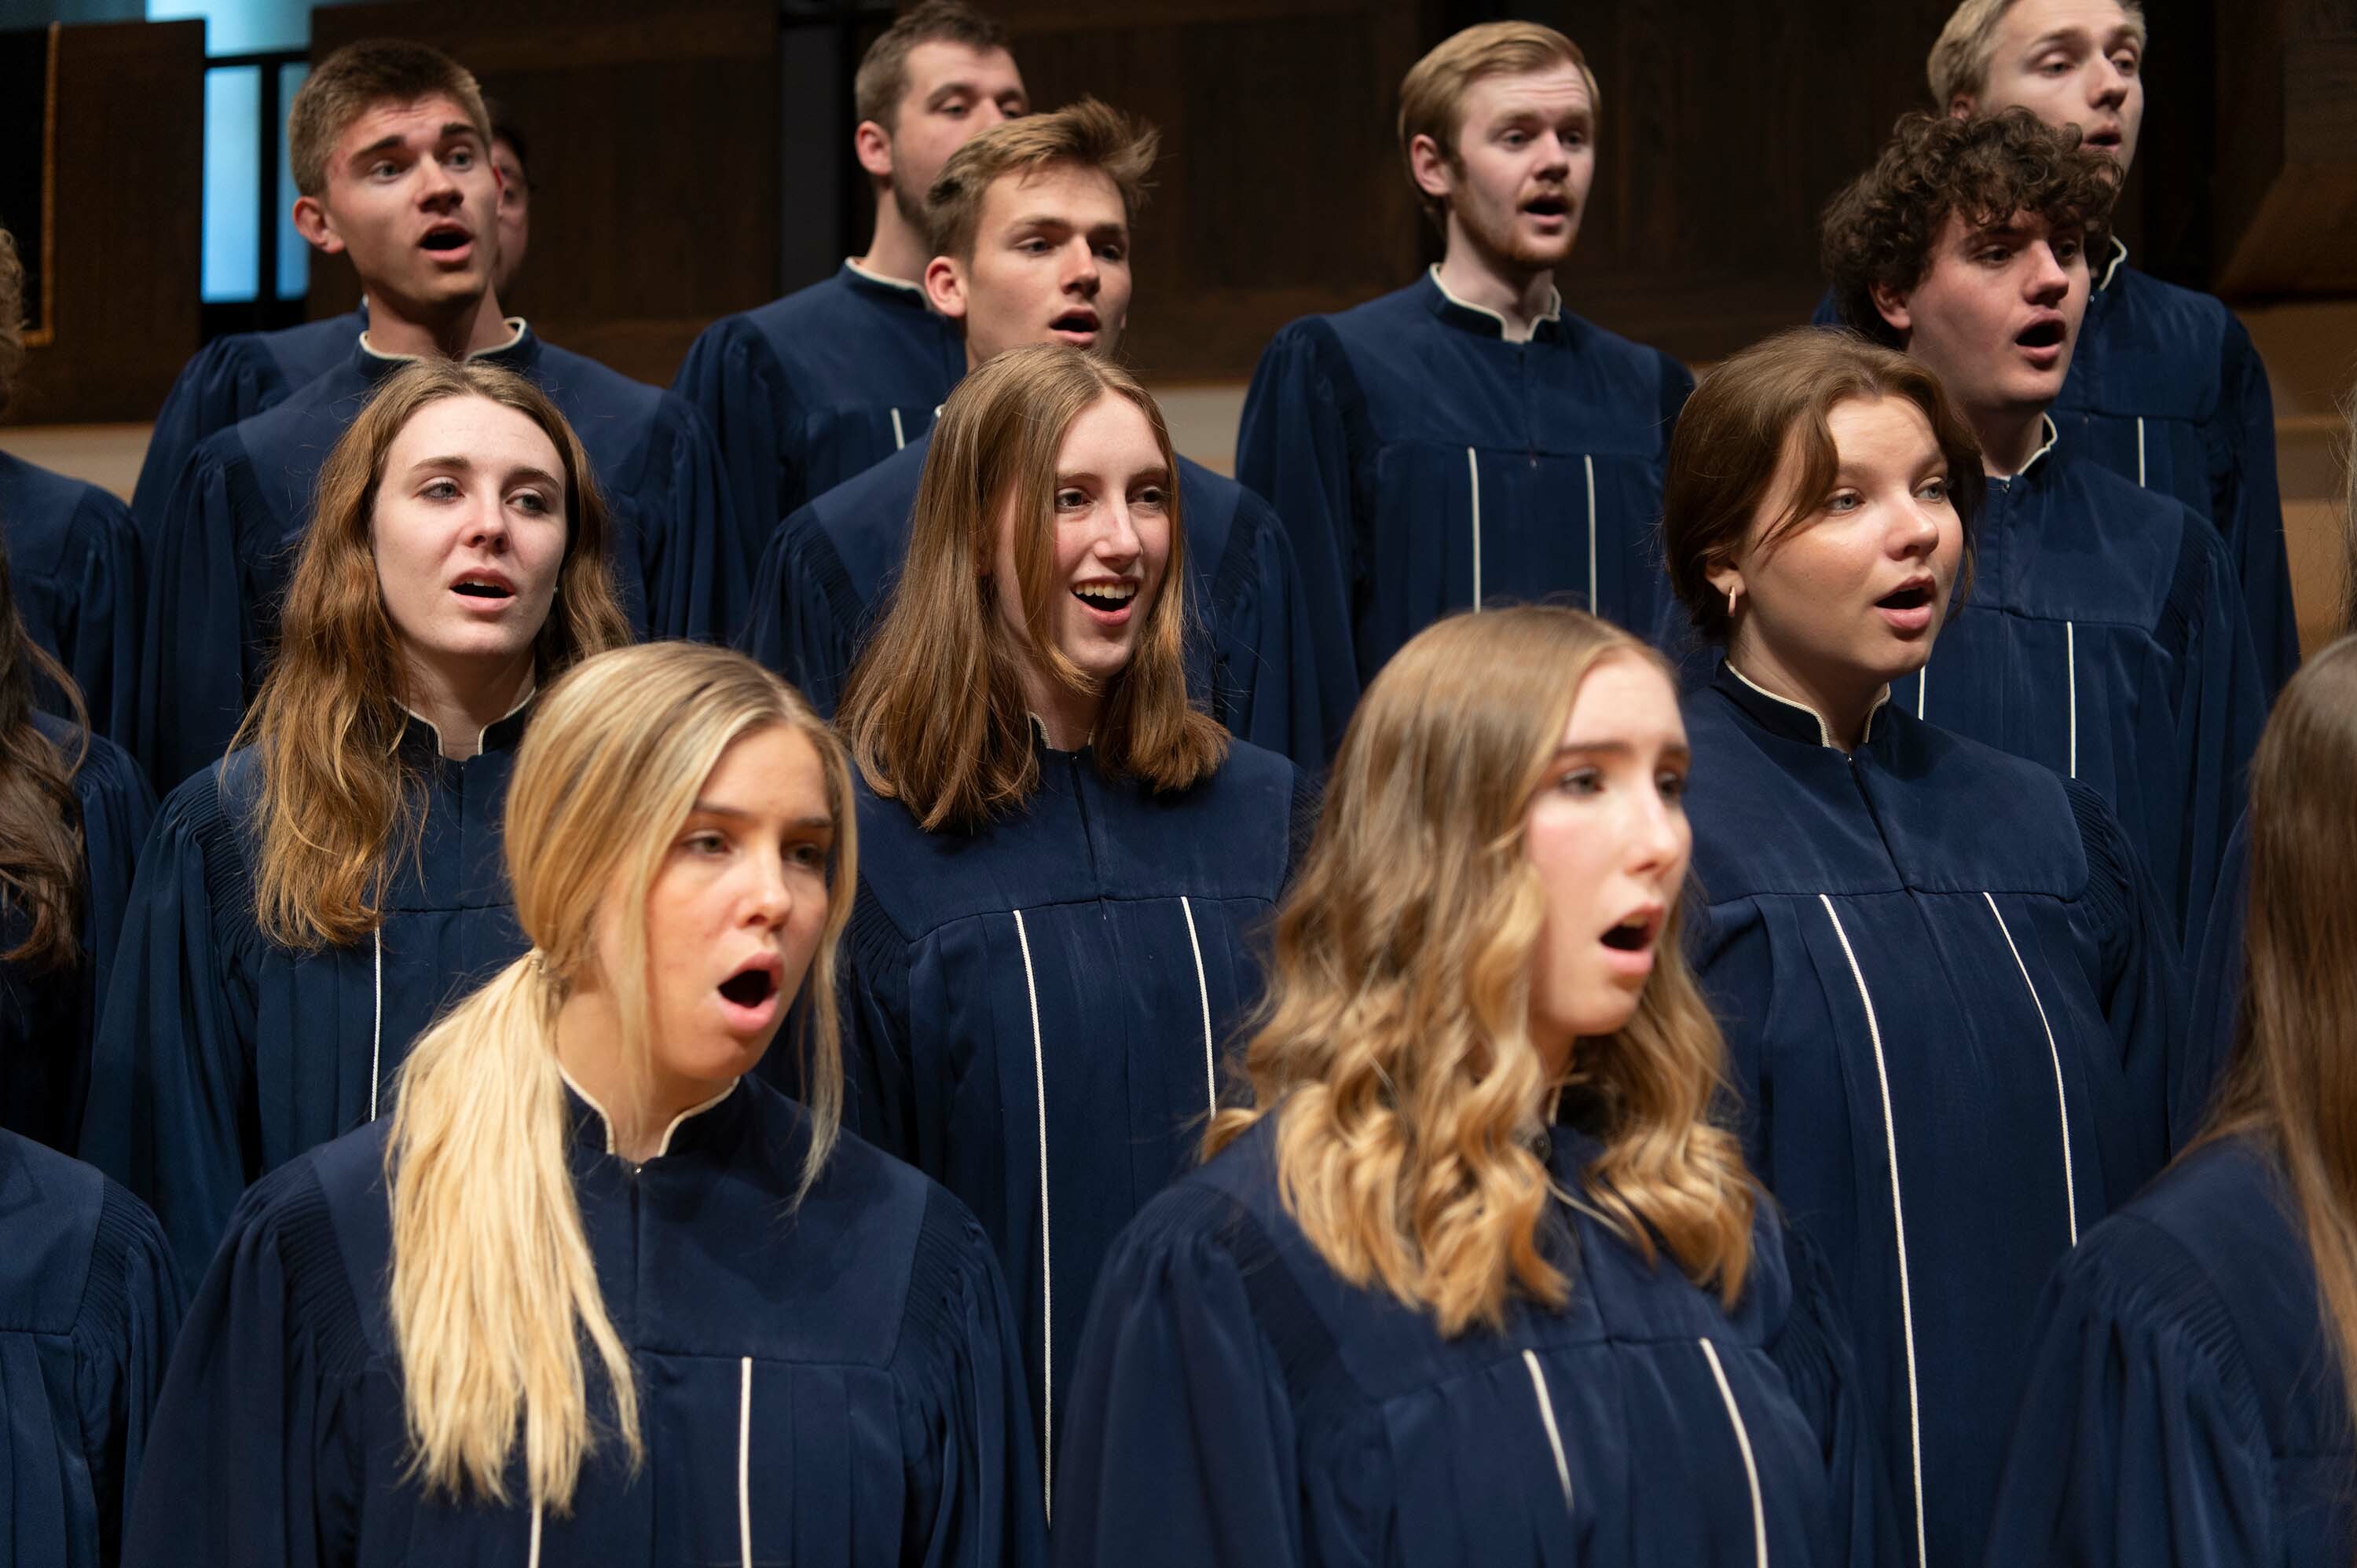 Concert Choir singing in their robes